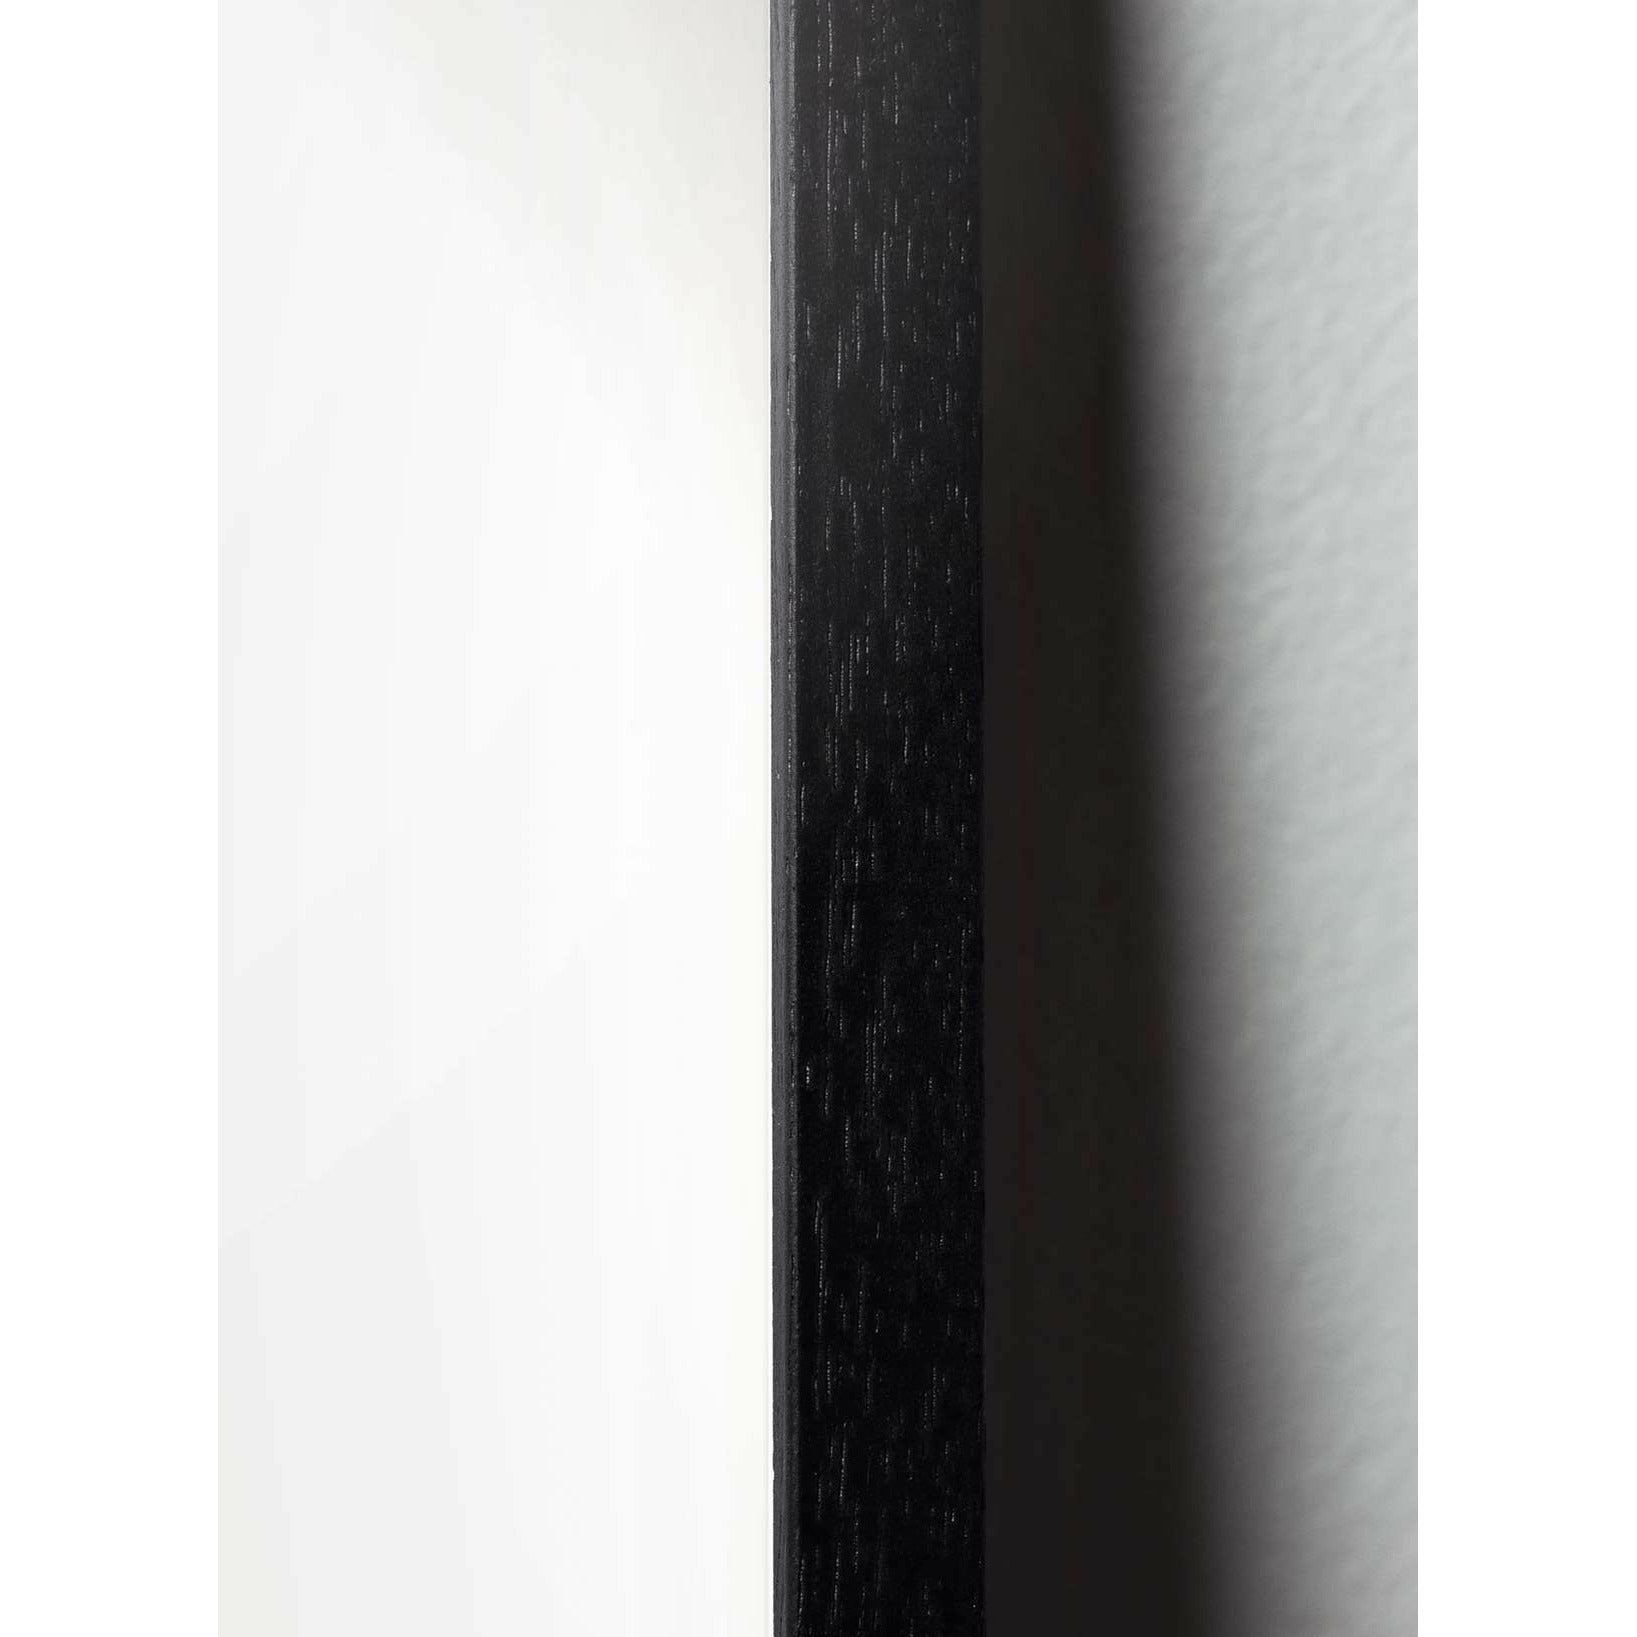 Brainchild Äggfiguraffisch, ram i svart -målat trä 50x70 cm, brunt